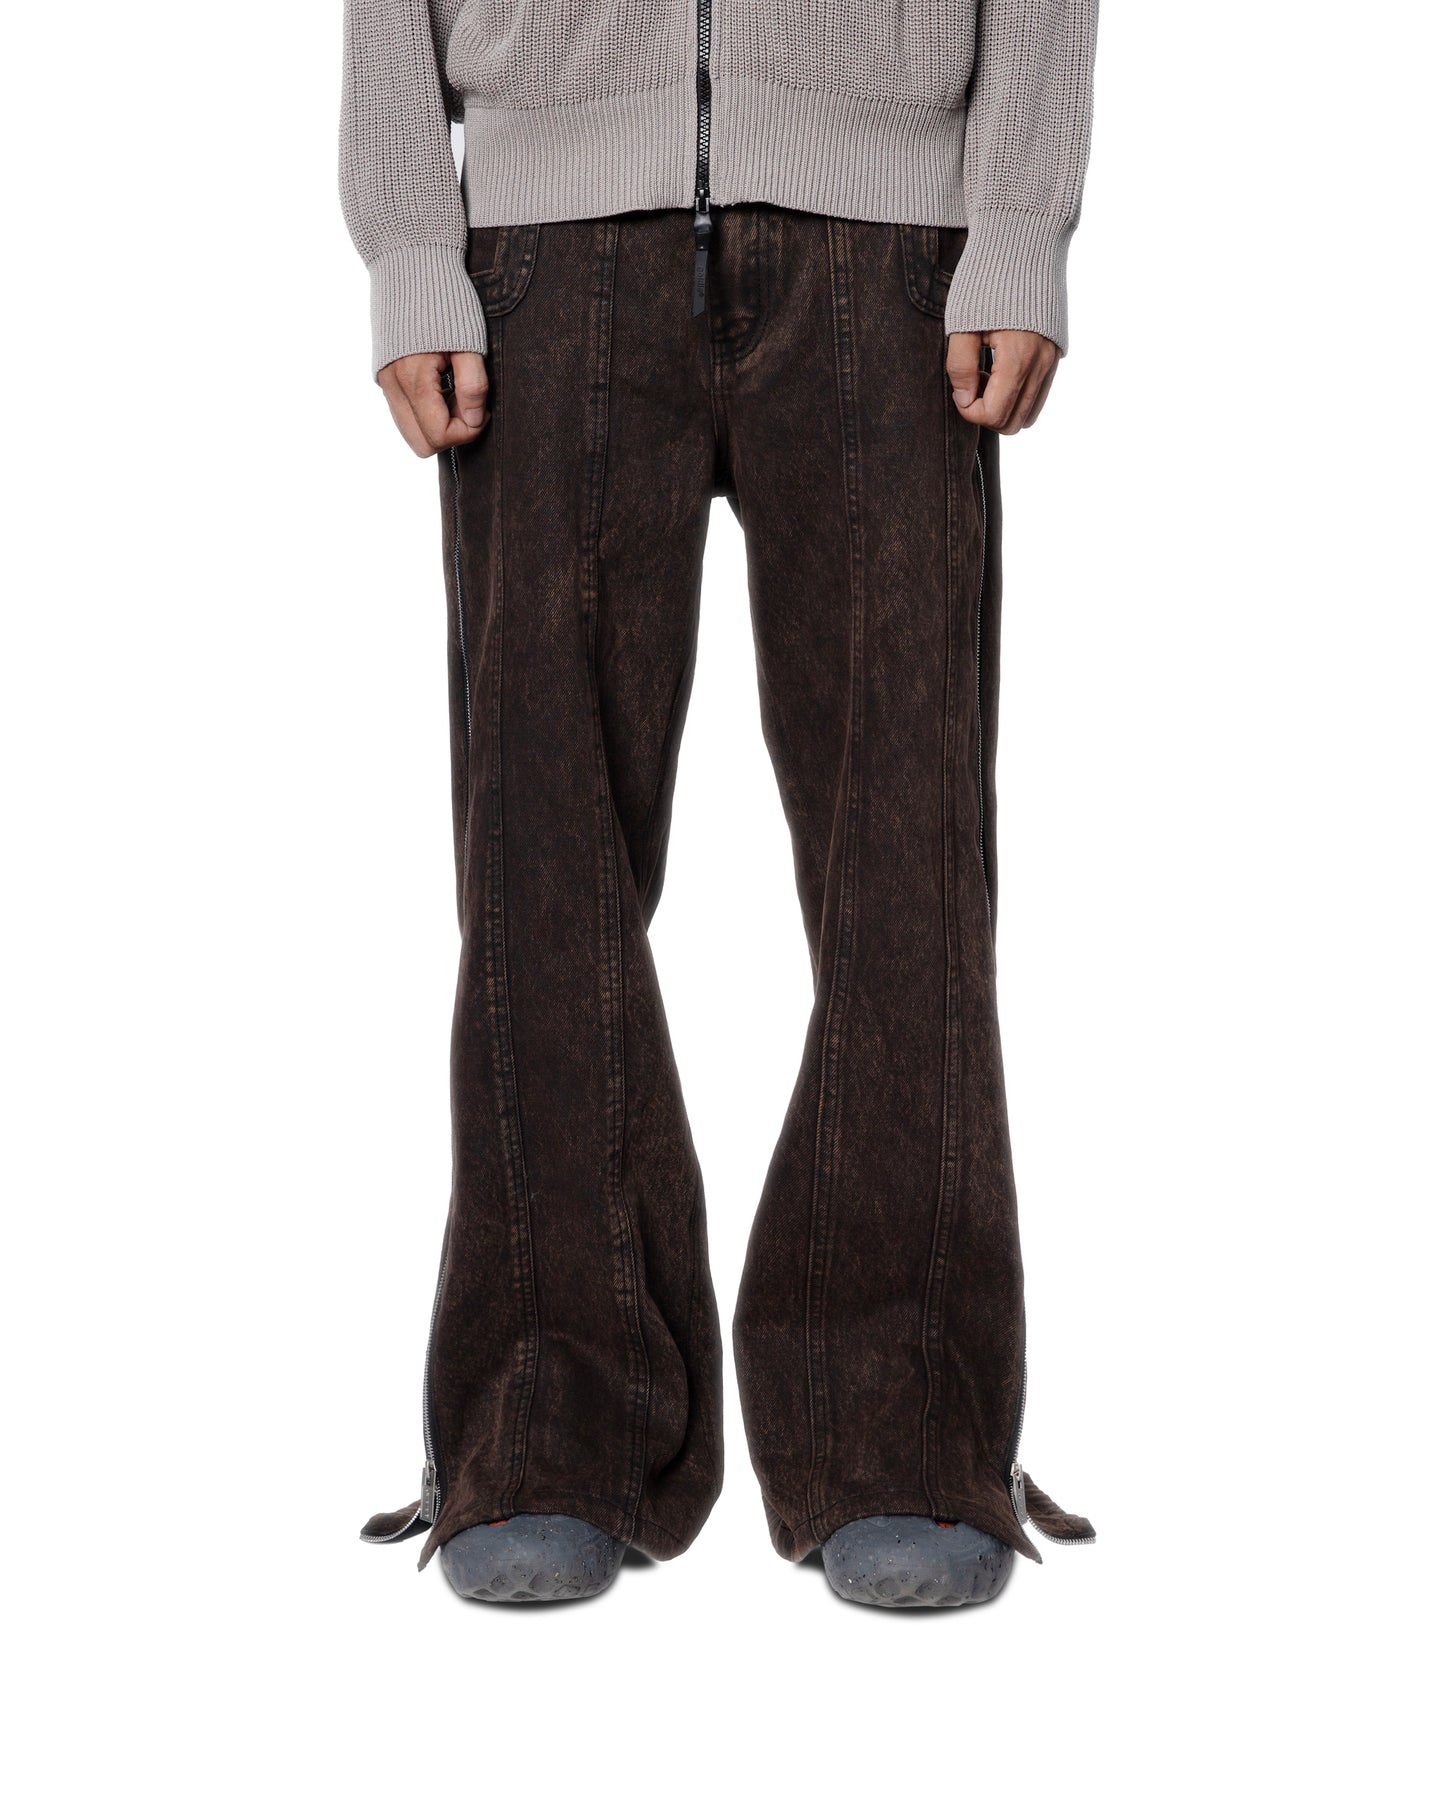 zipped-brown-washed-denim-pants-goldie-astoud